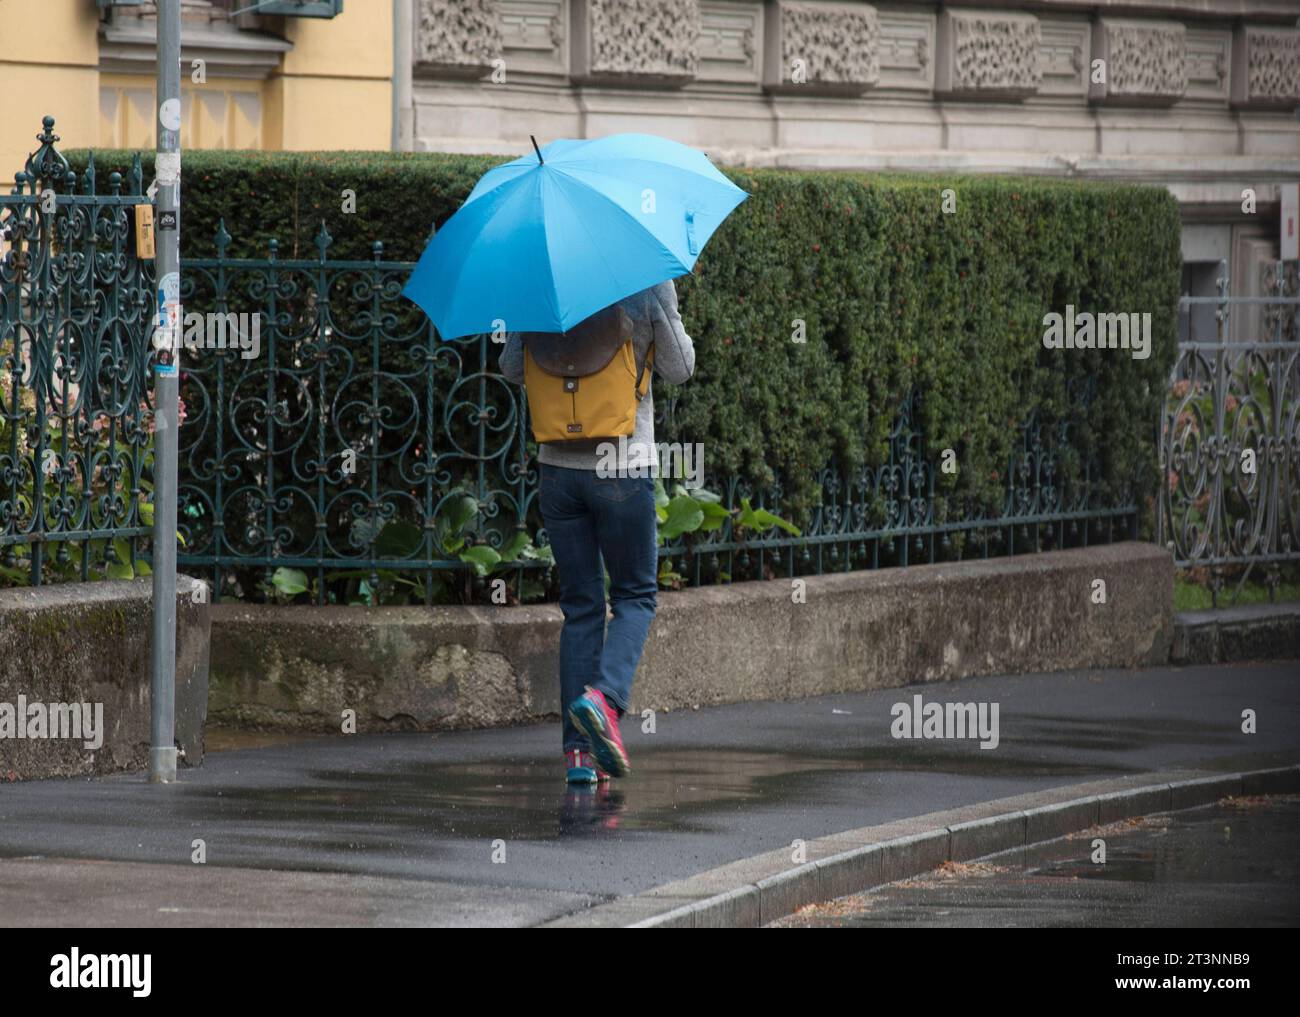 An Umbrella As A Protection Against Rain On The Outside Umbrella As Protection Against Rain Credit: Imago/Alamy Live News Stock Photo